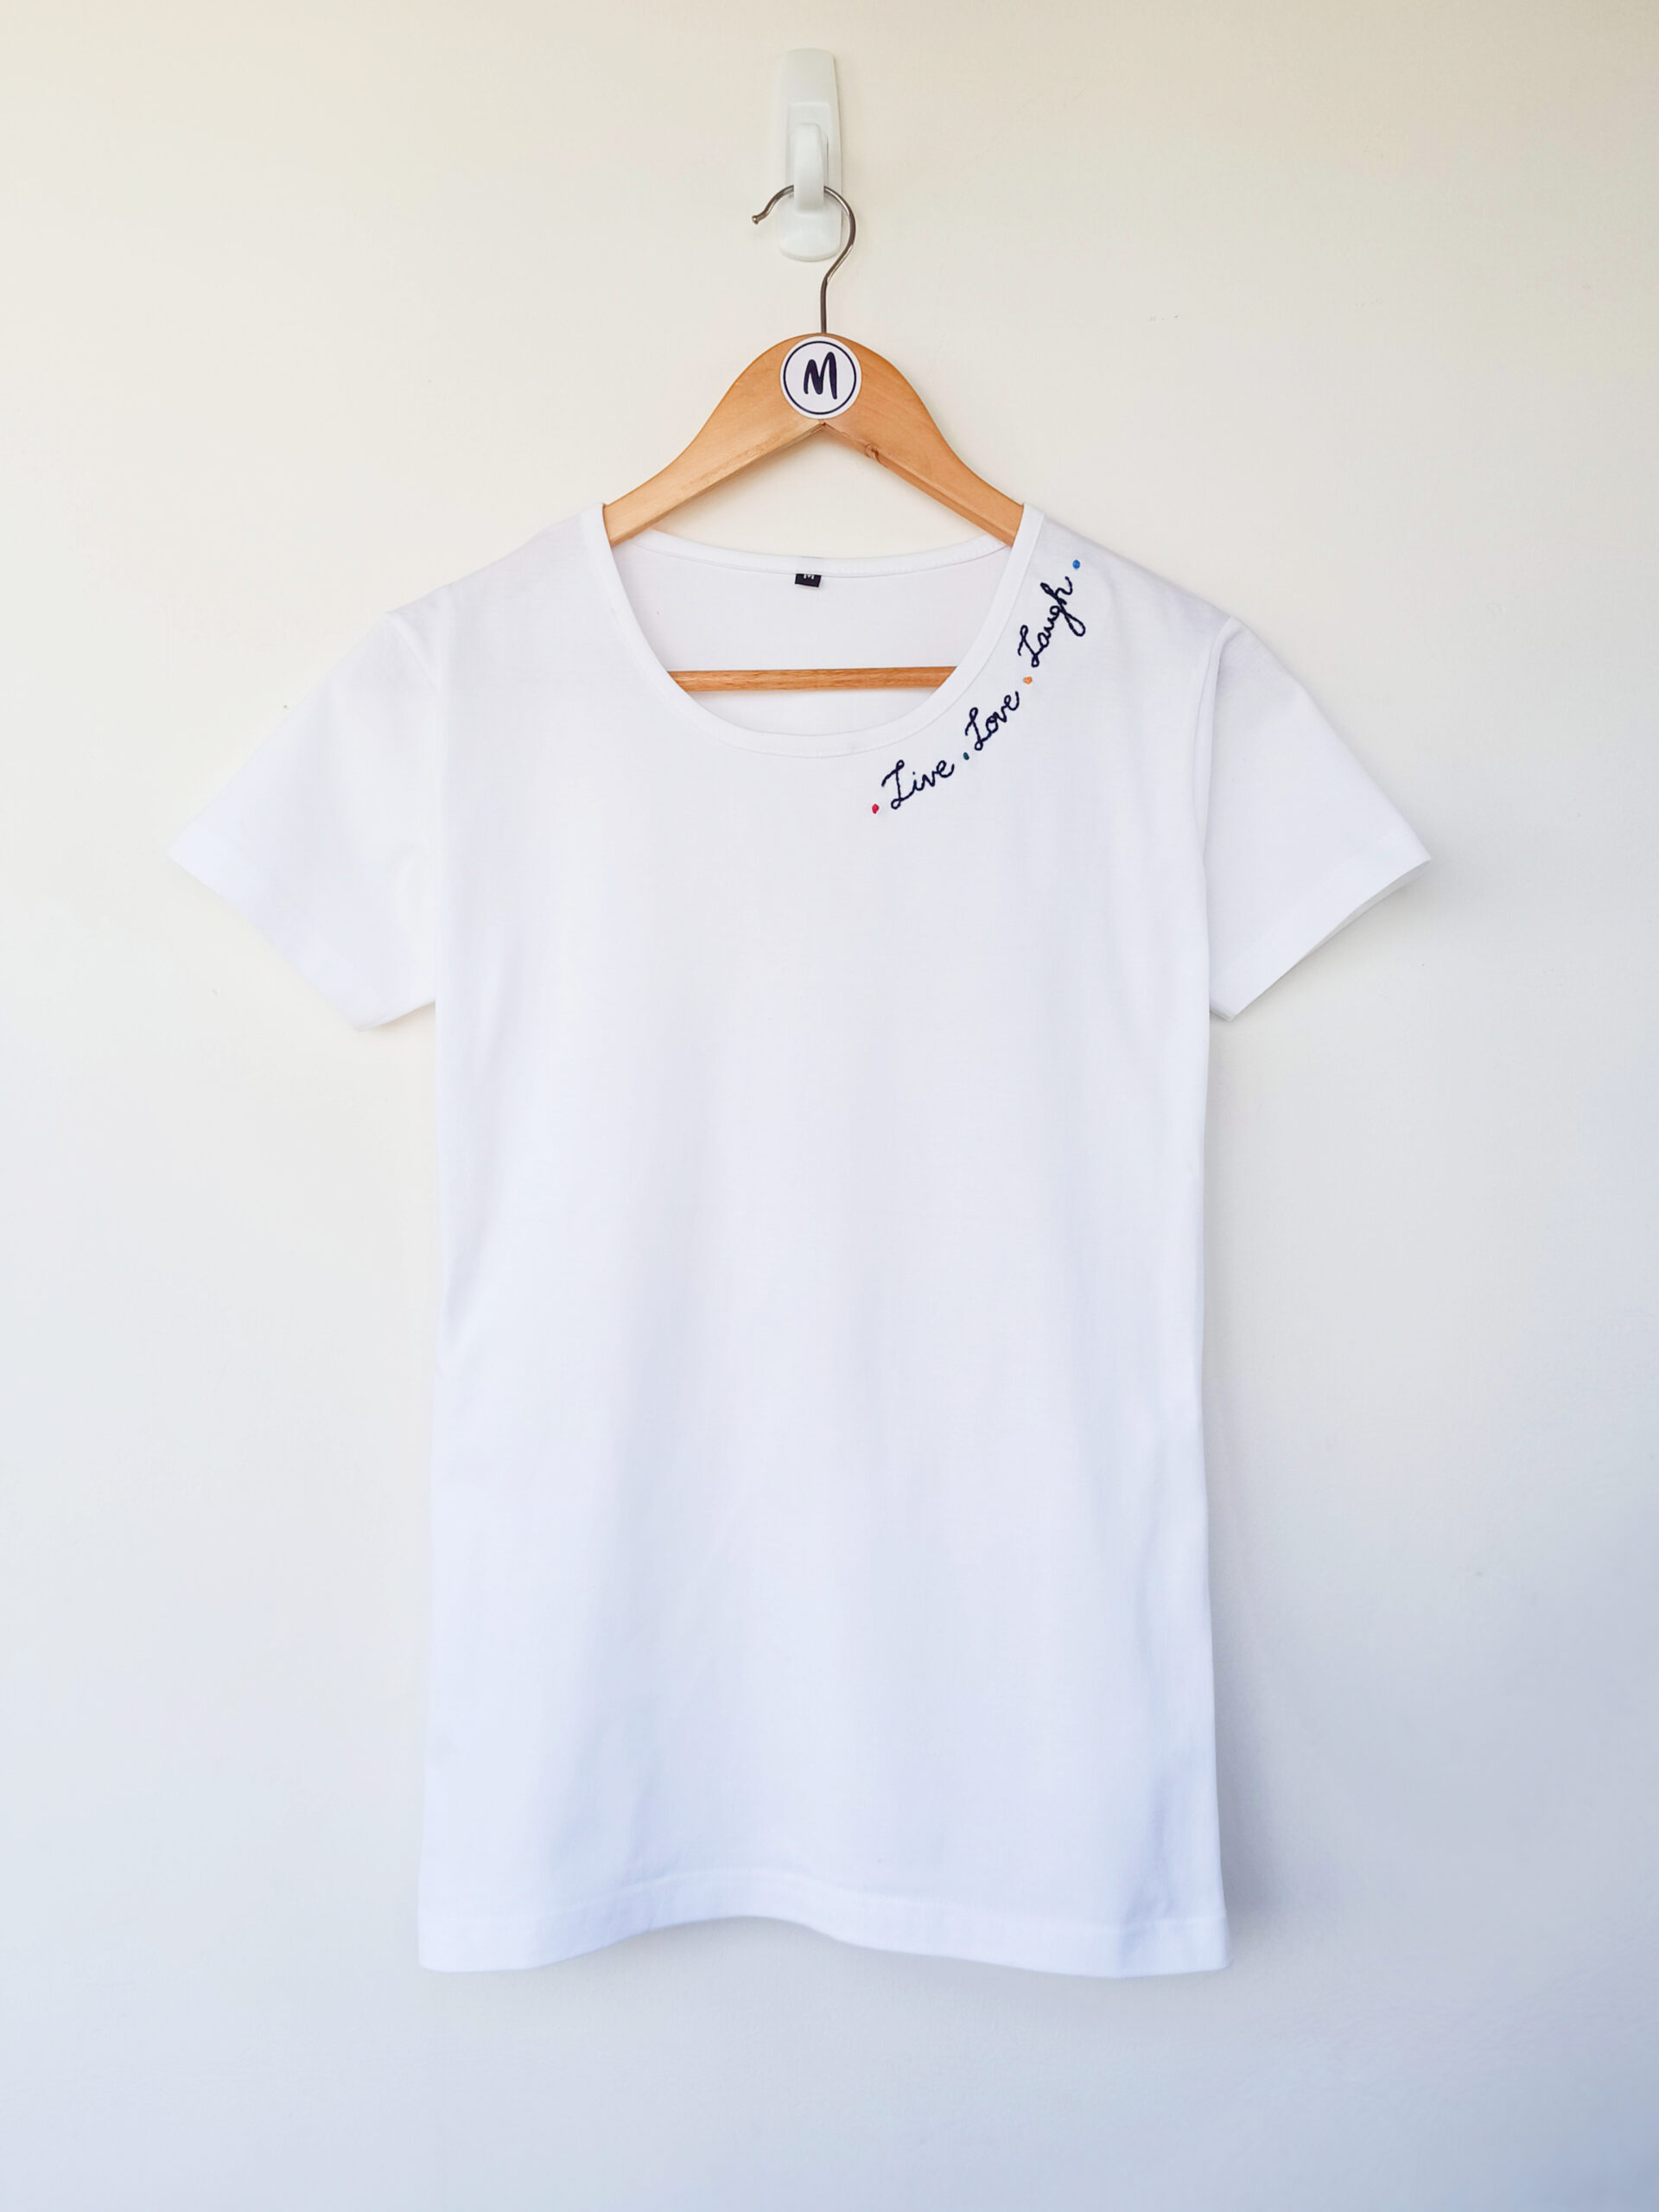 IAMHOTTY White Line Reflective Woman T Shirt Letter Print Zipper